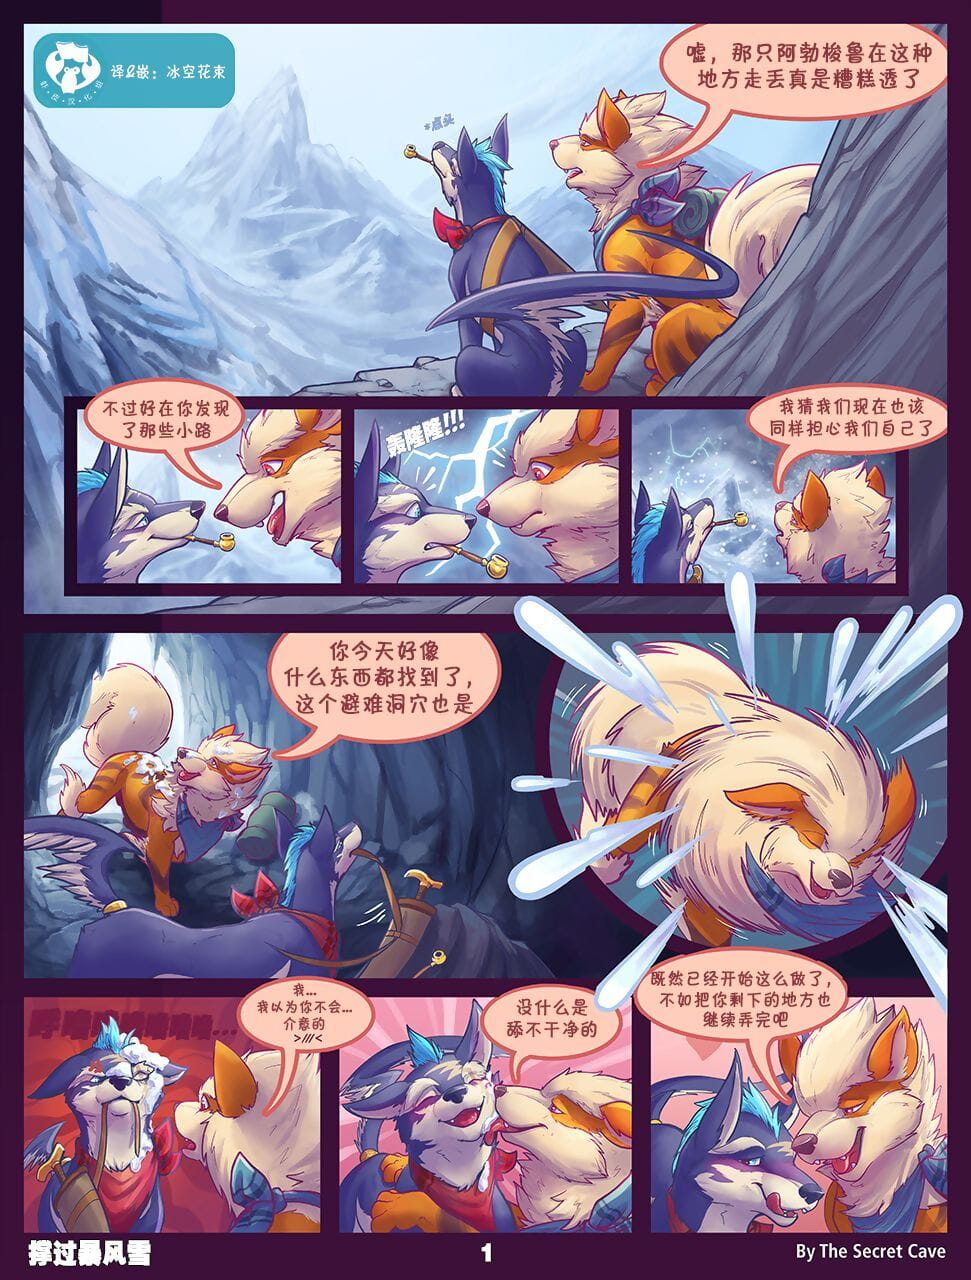 Weathering a Blizzard - 撑过暴风雪 page 1